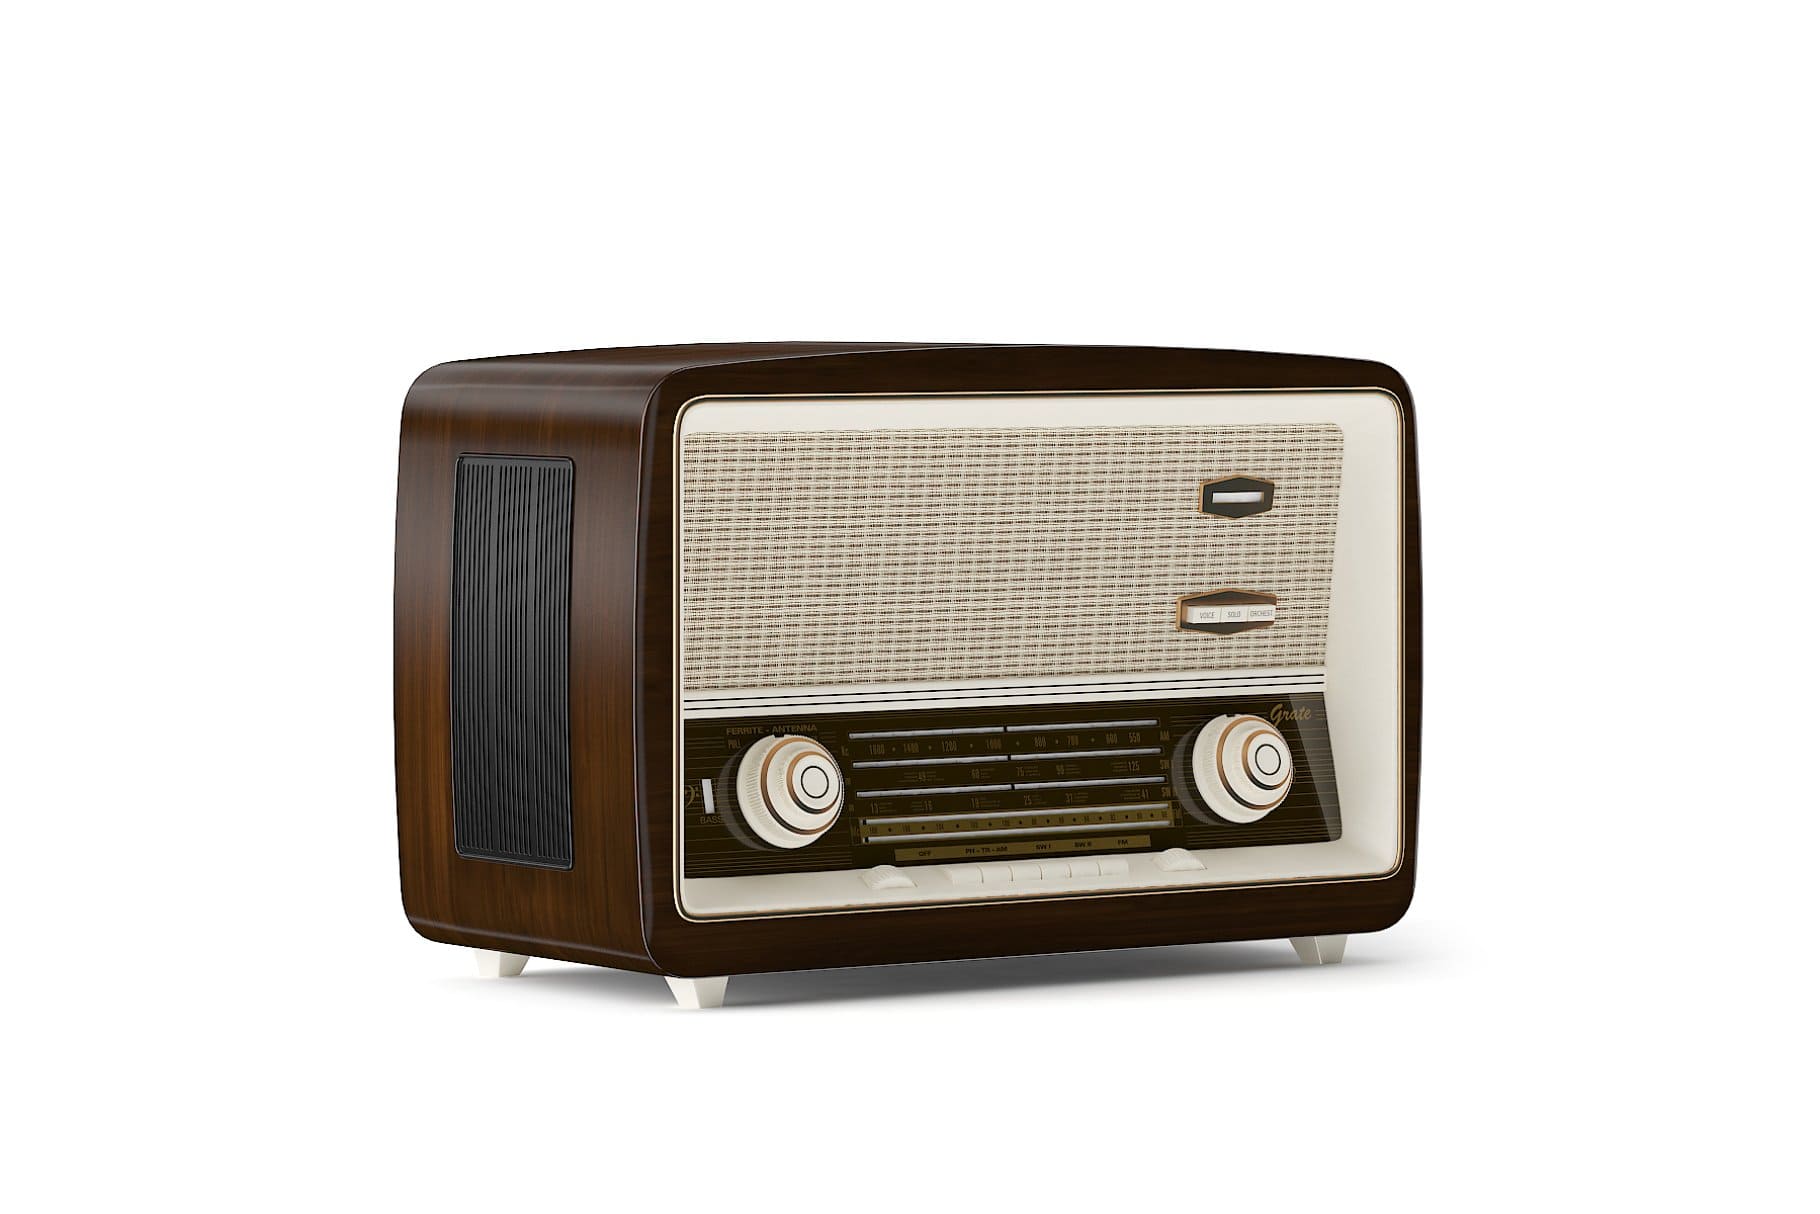 3d model of antique radio in wooden case.